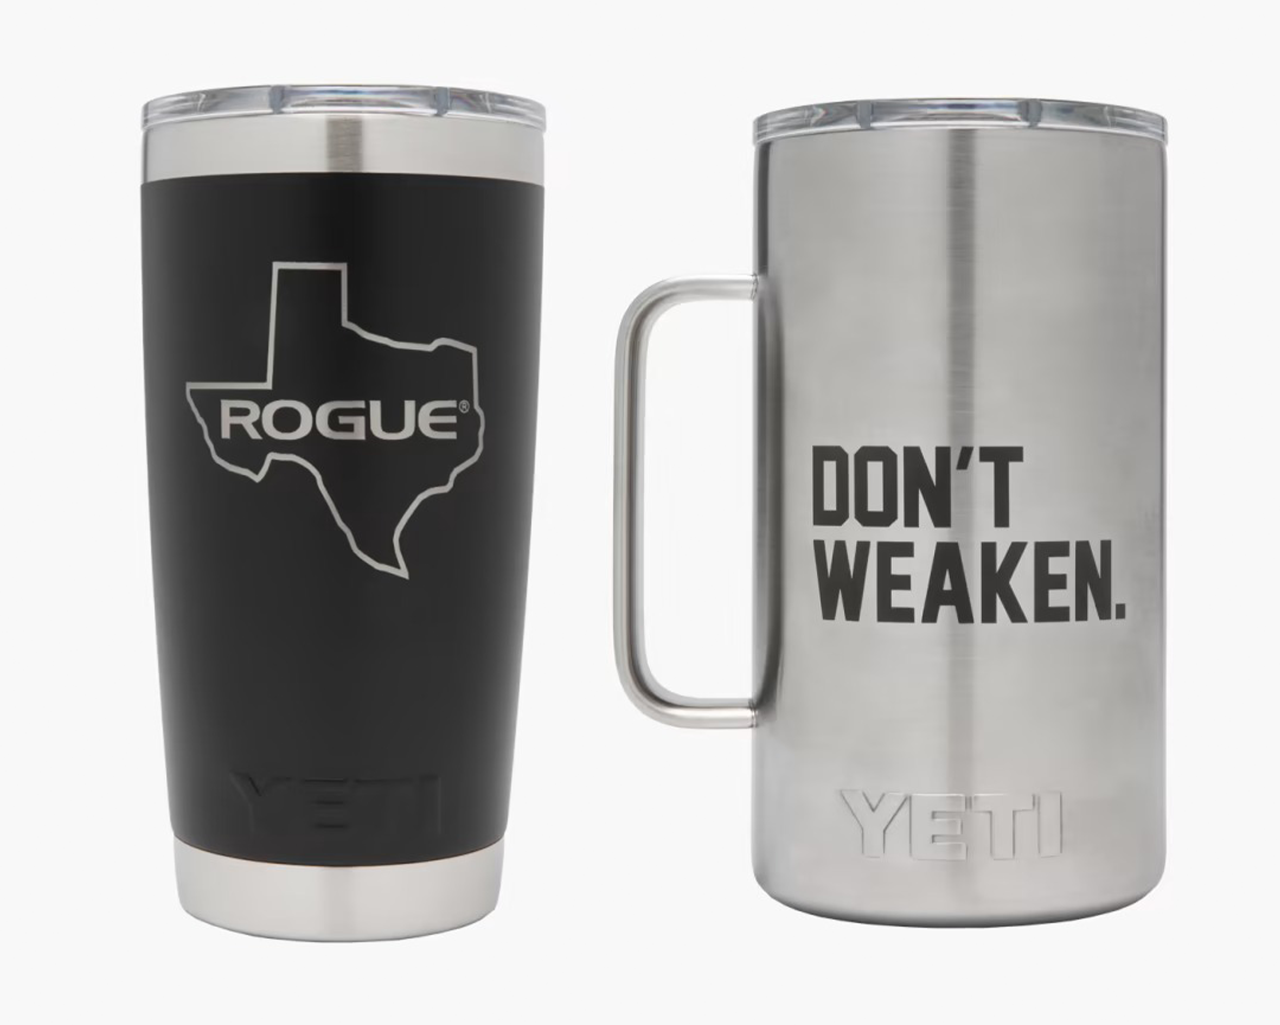 YETI - Rogue Texas Ramblers